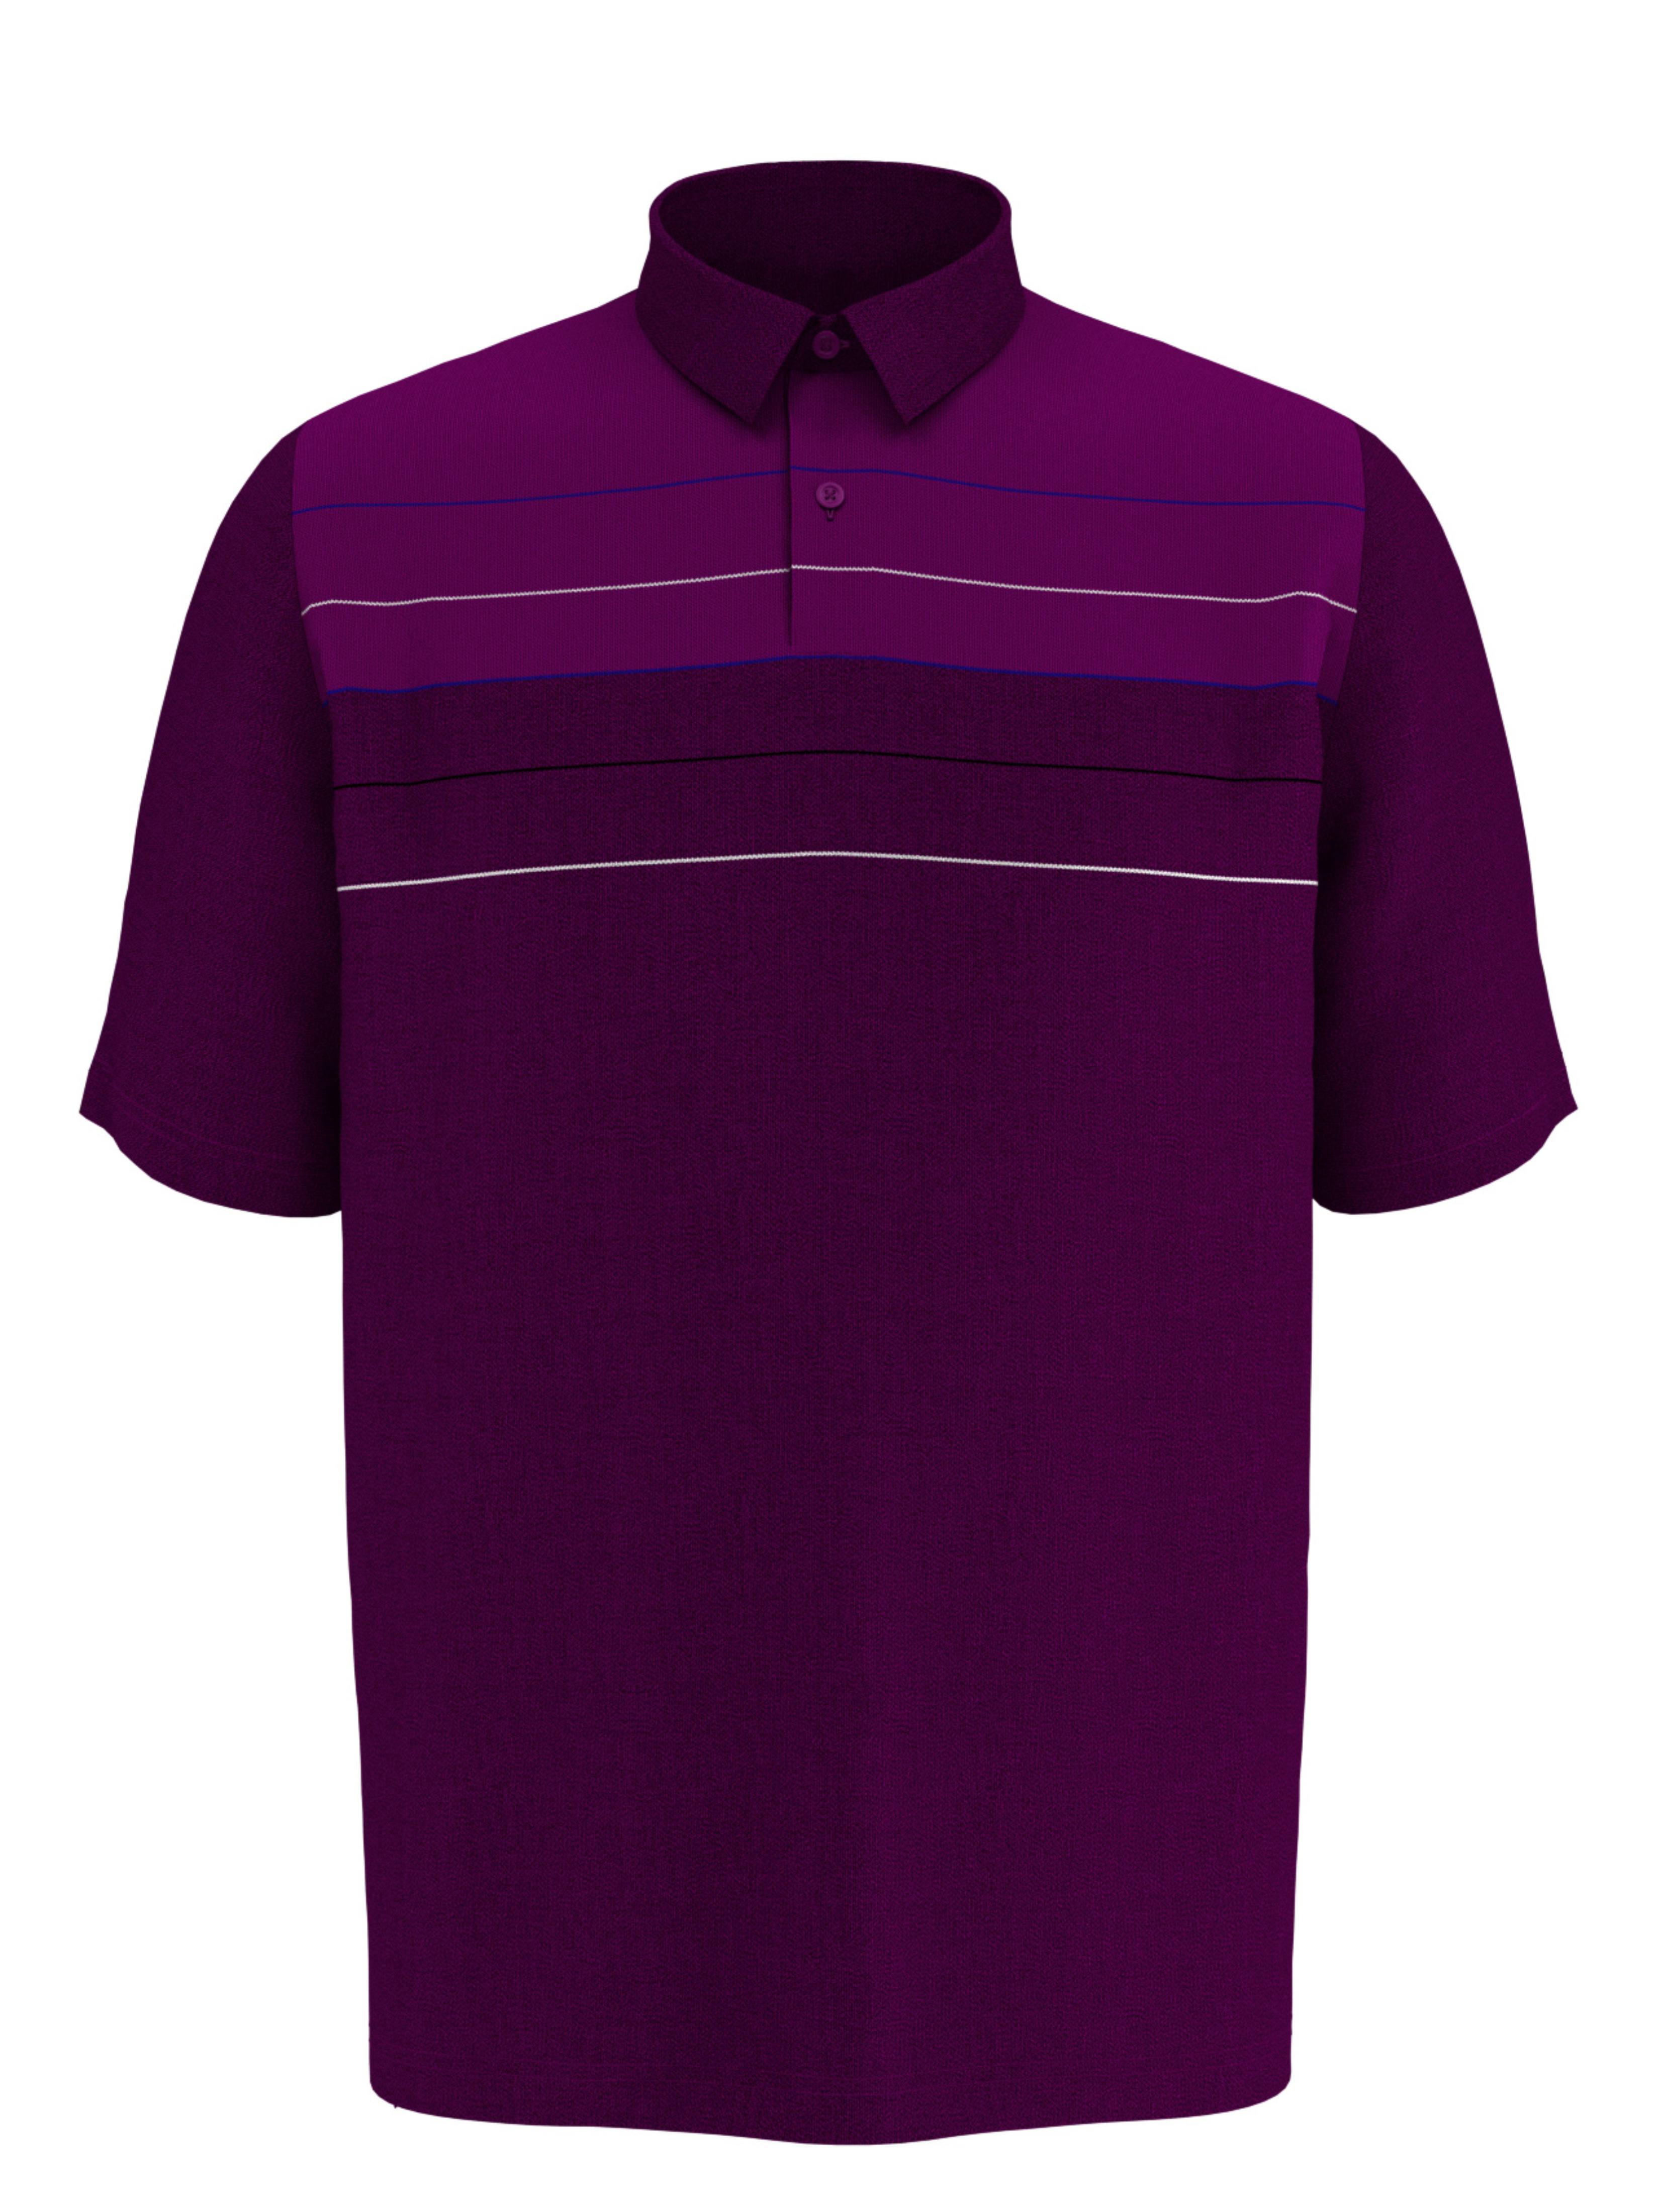 Callaway Apparel Mens Big & Tall Jaspe Color Block Golf Polo Shirt, Size 5X, Dark Purple, Polyester/Recycled Polyester/Elastane | Golf Apparel Shop